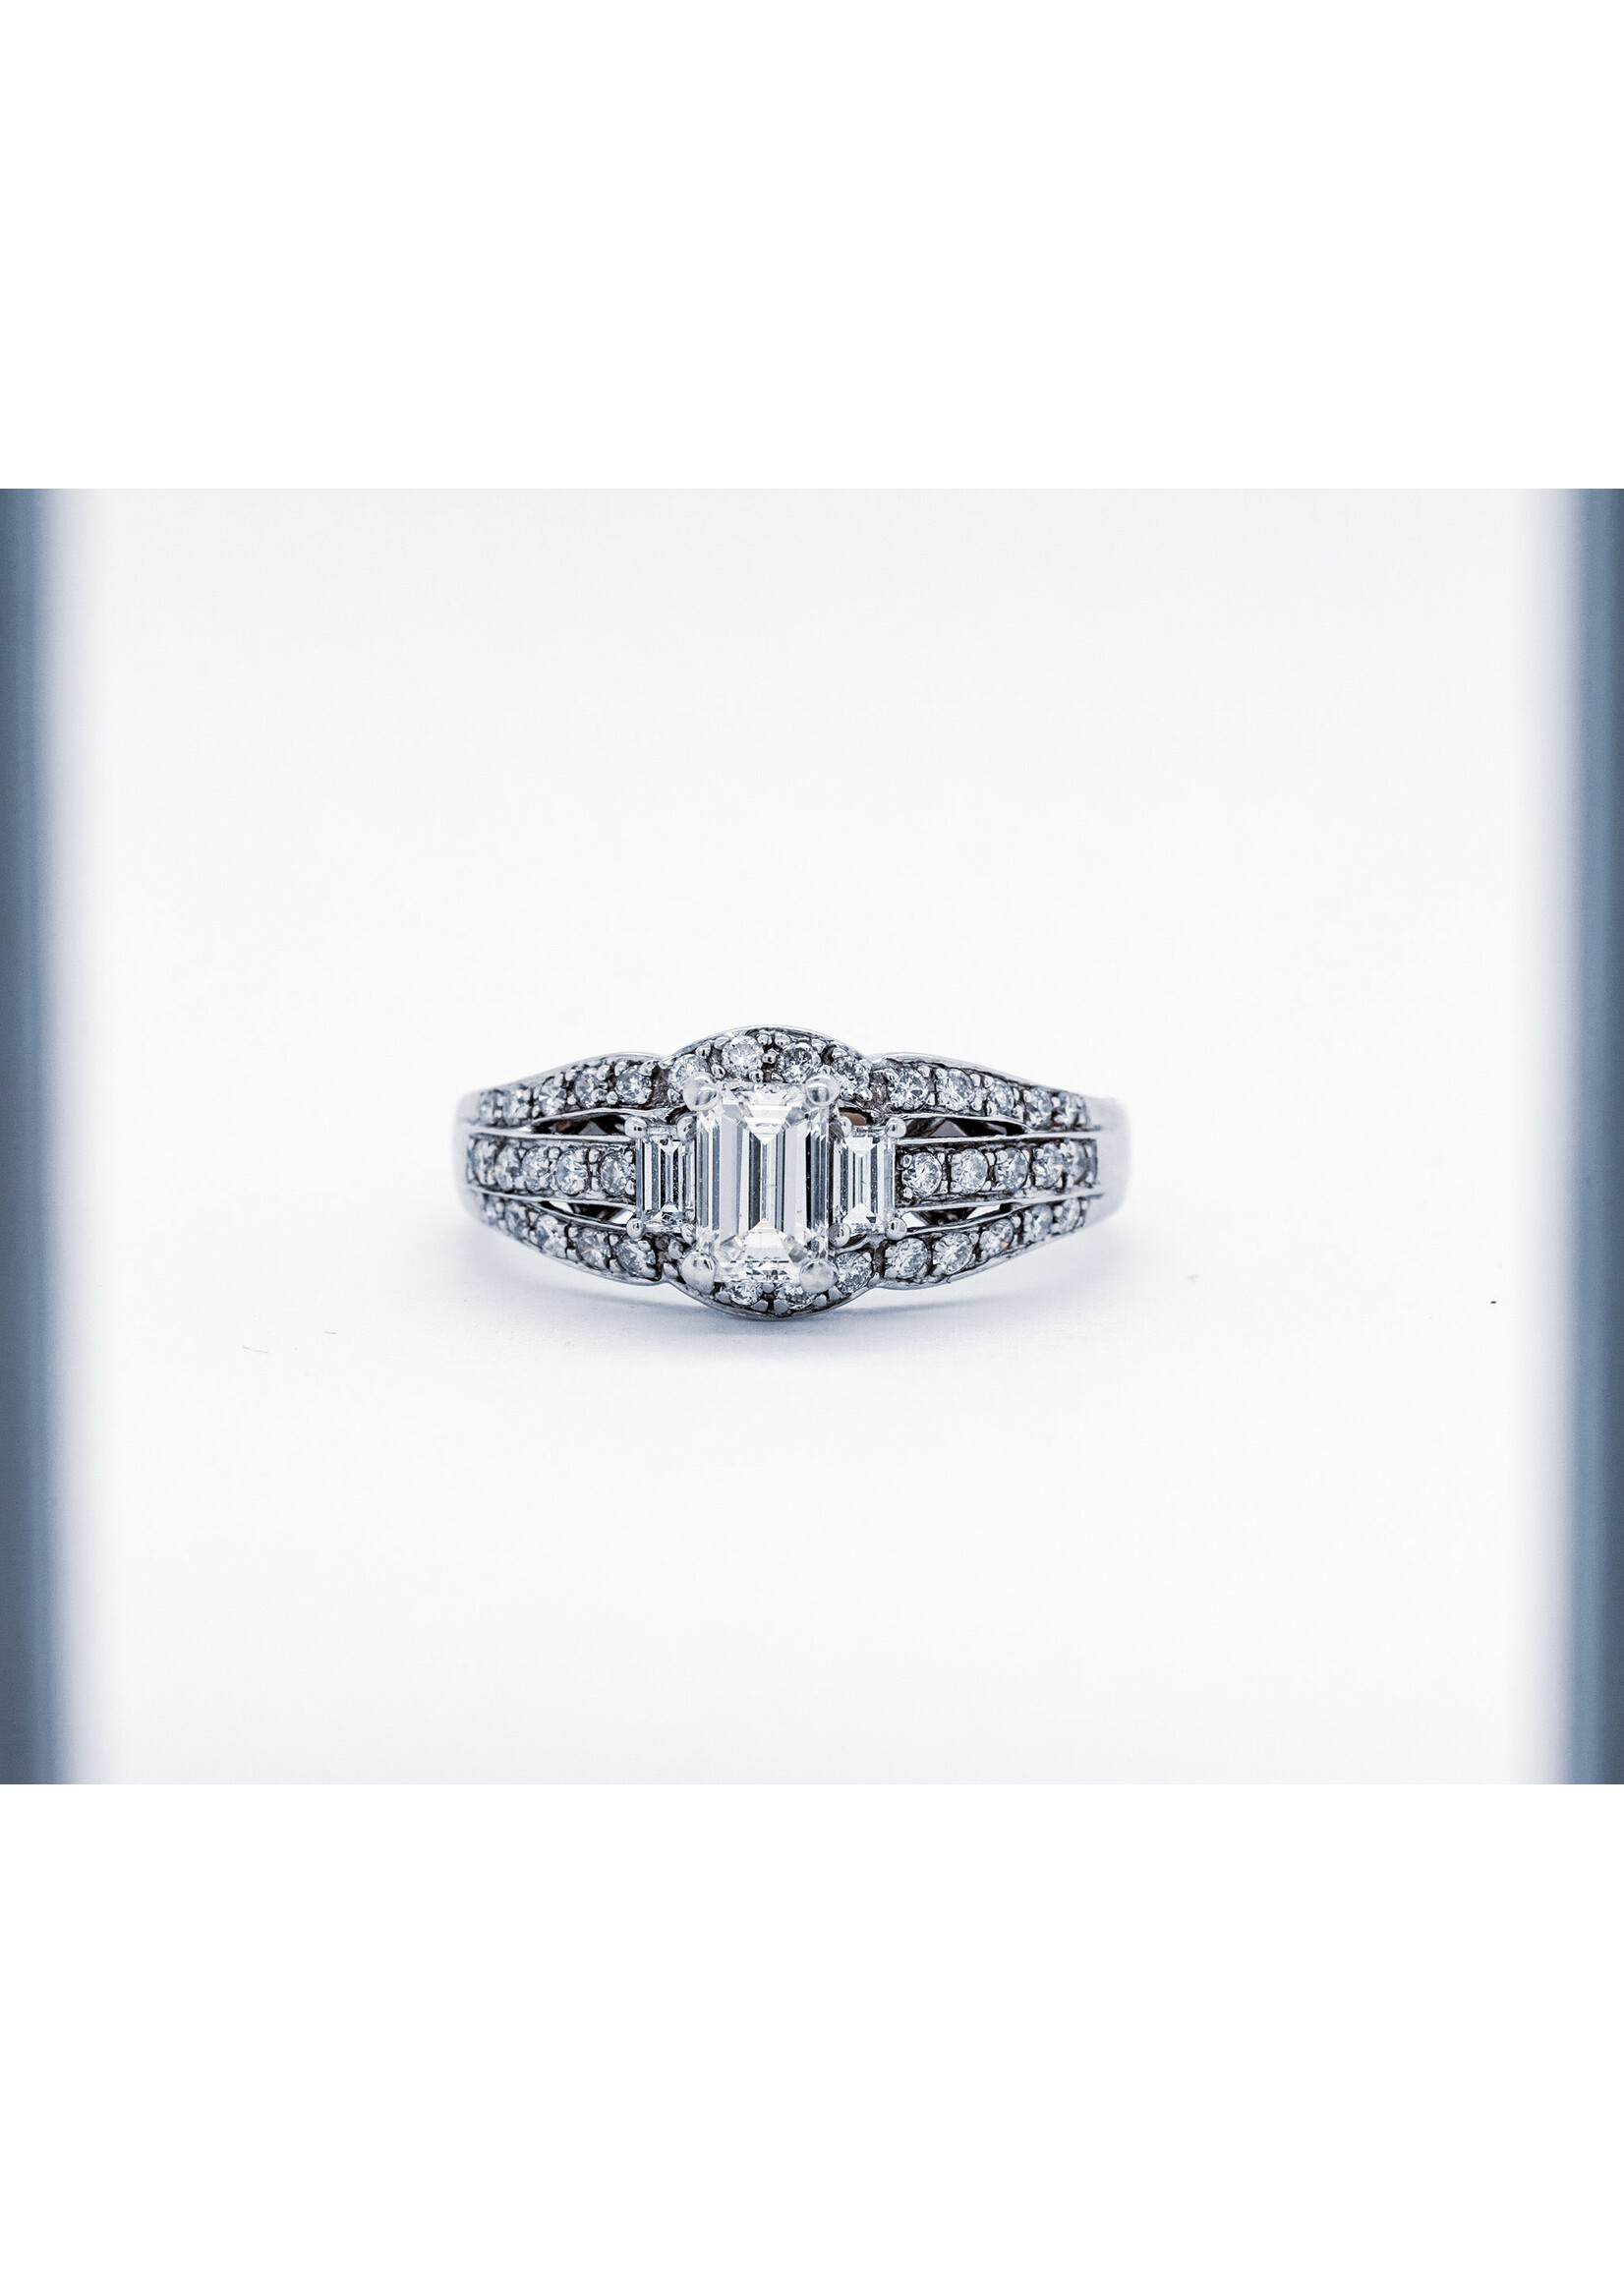 14KW 4.7g 1.50ctw (.76ctr) I/VS2 Emerald Cut Diamond Engagement Ring (size 9)